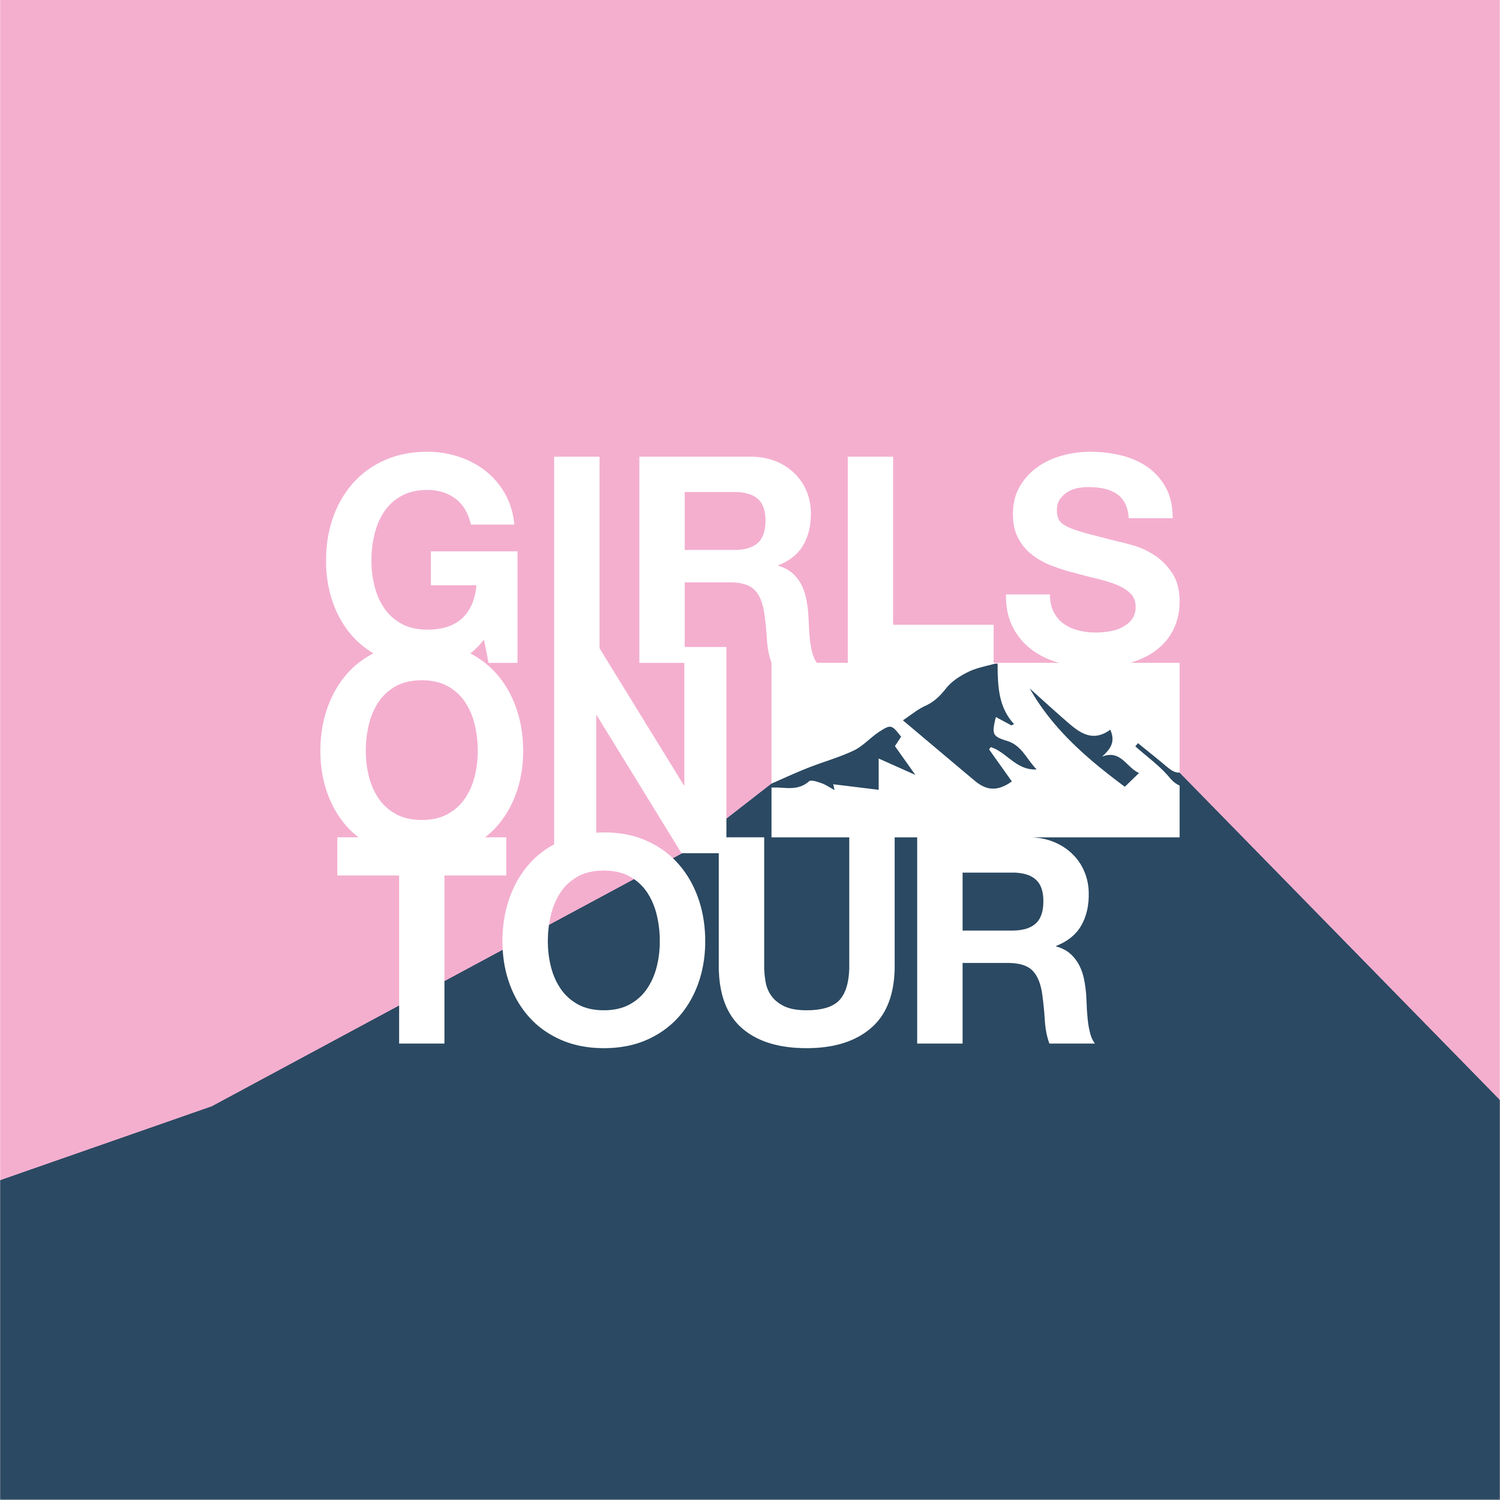 GIRLS on TOUR